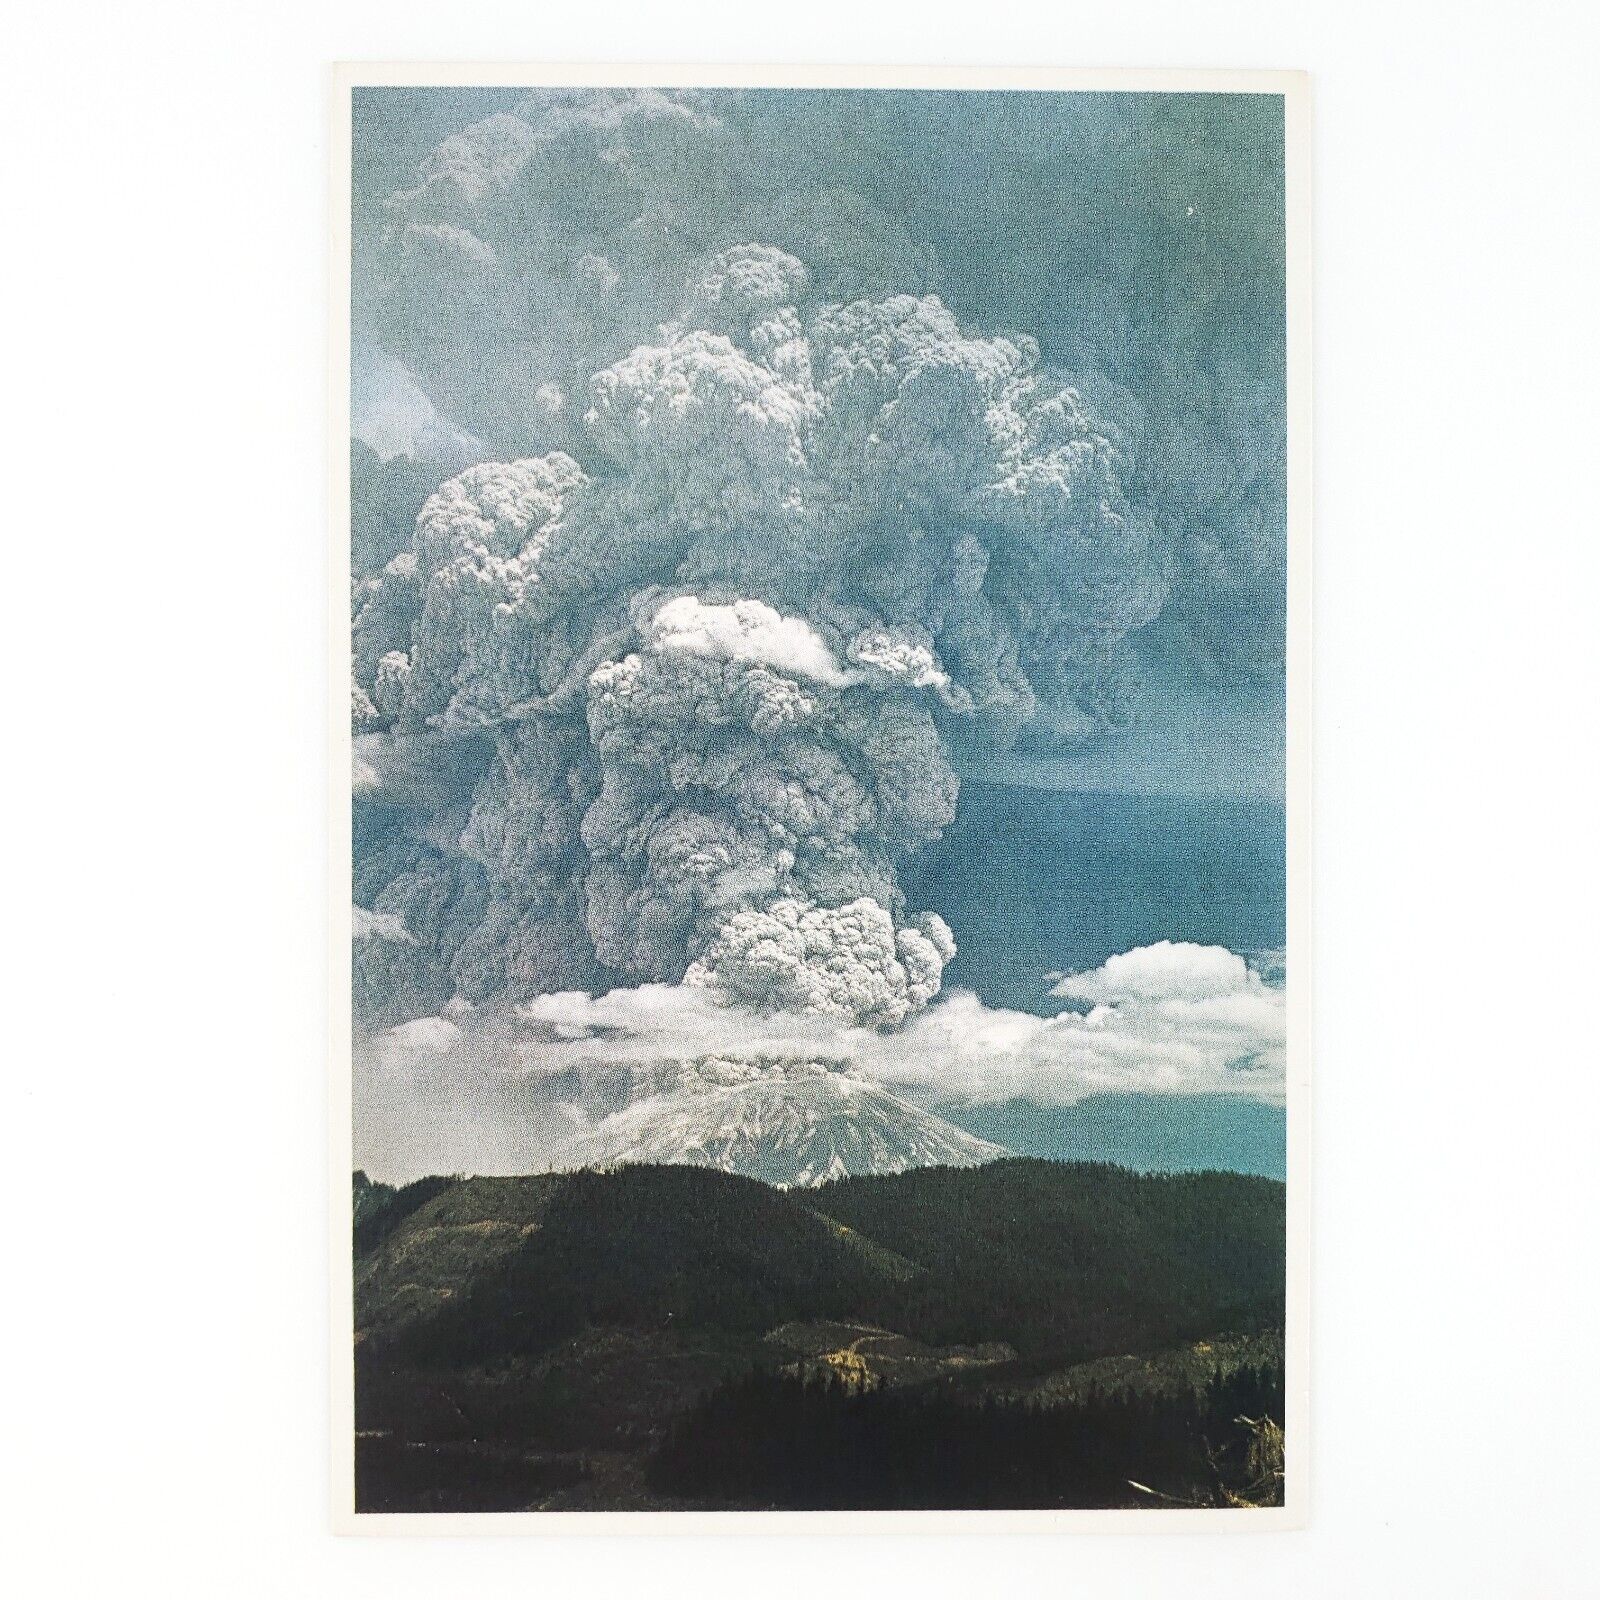 Mount St Helens Eruption Postcard c1980 Washington Volcano Disaster Smoke B1905